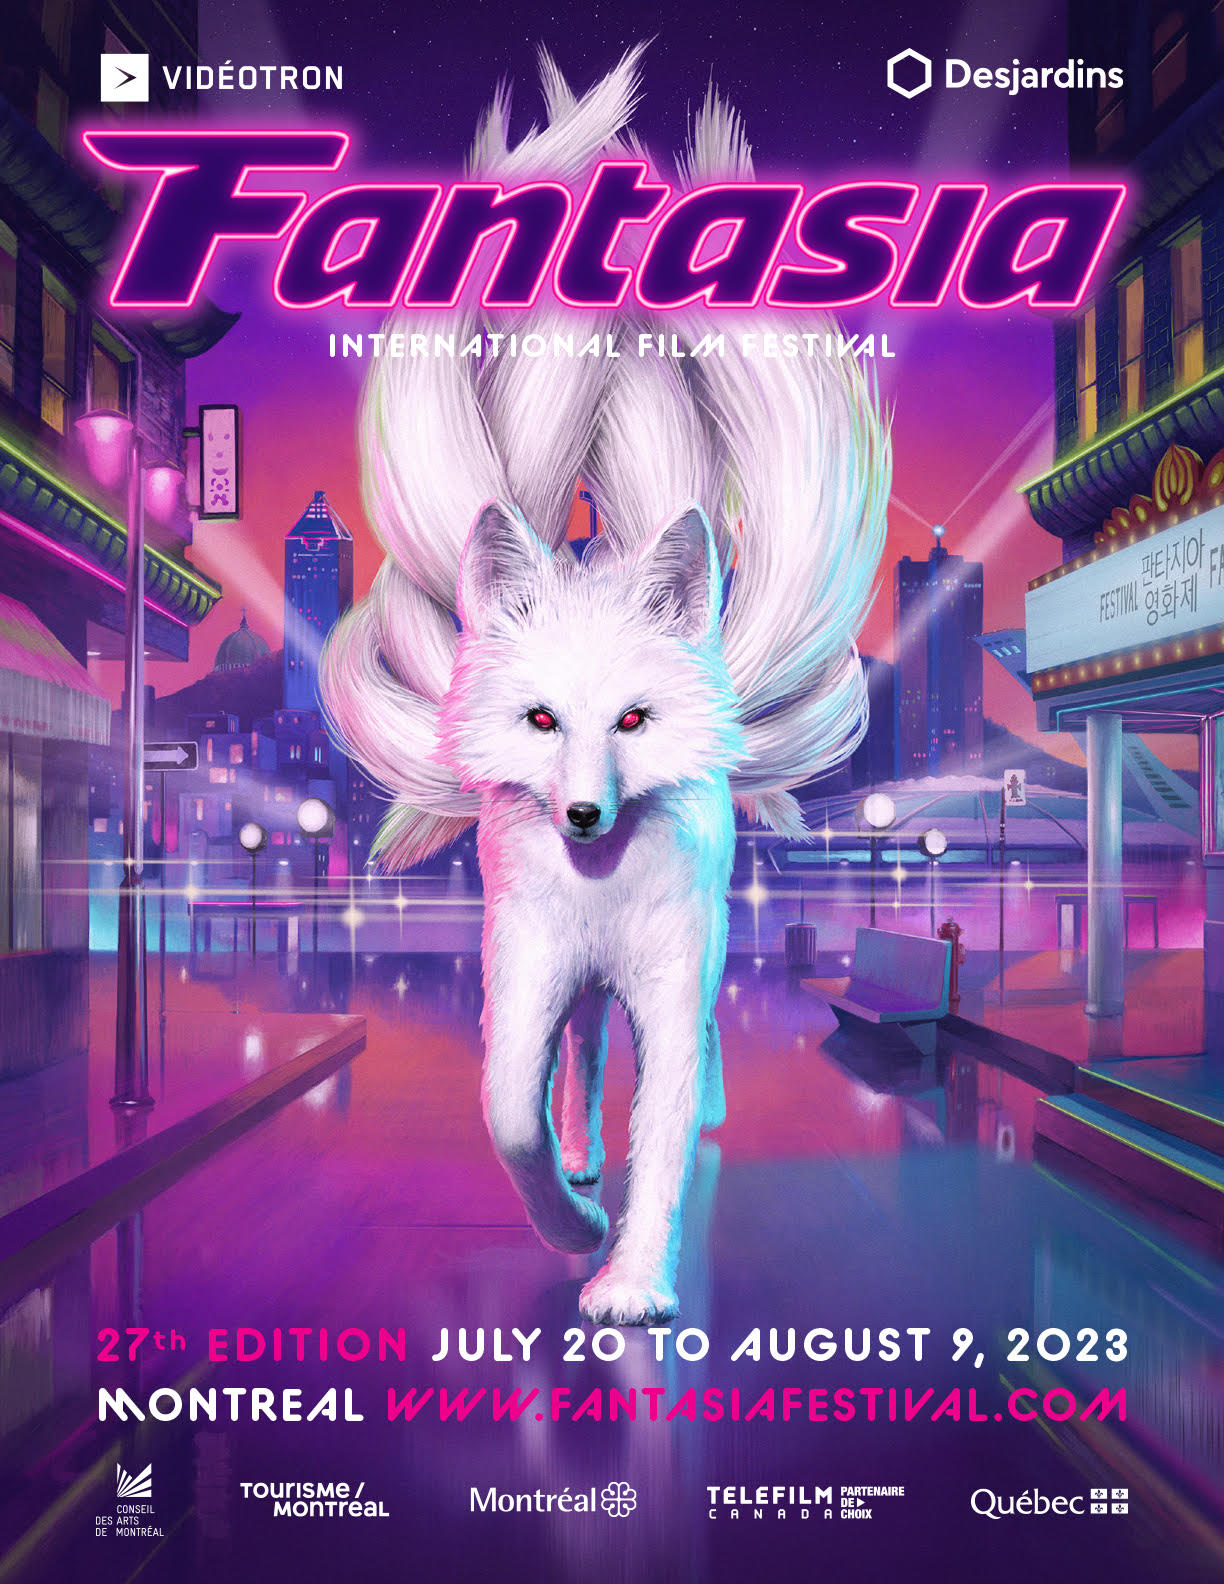 3 weeks of films starts Thursday at 27th Fantasia International